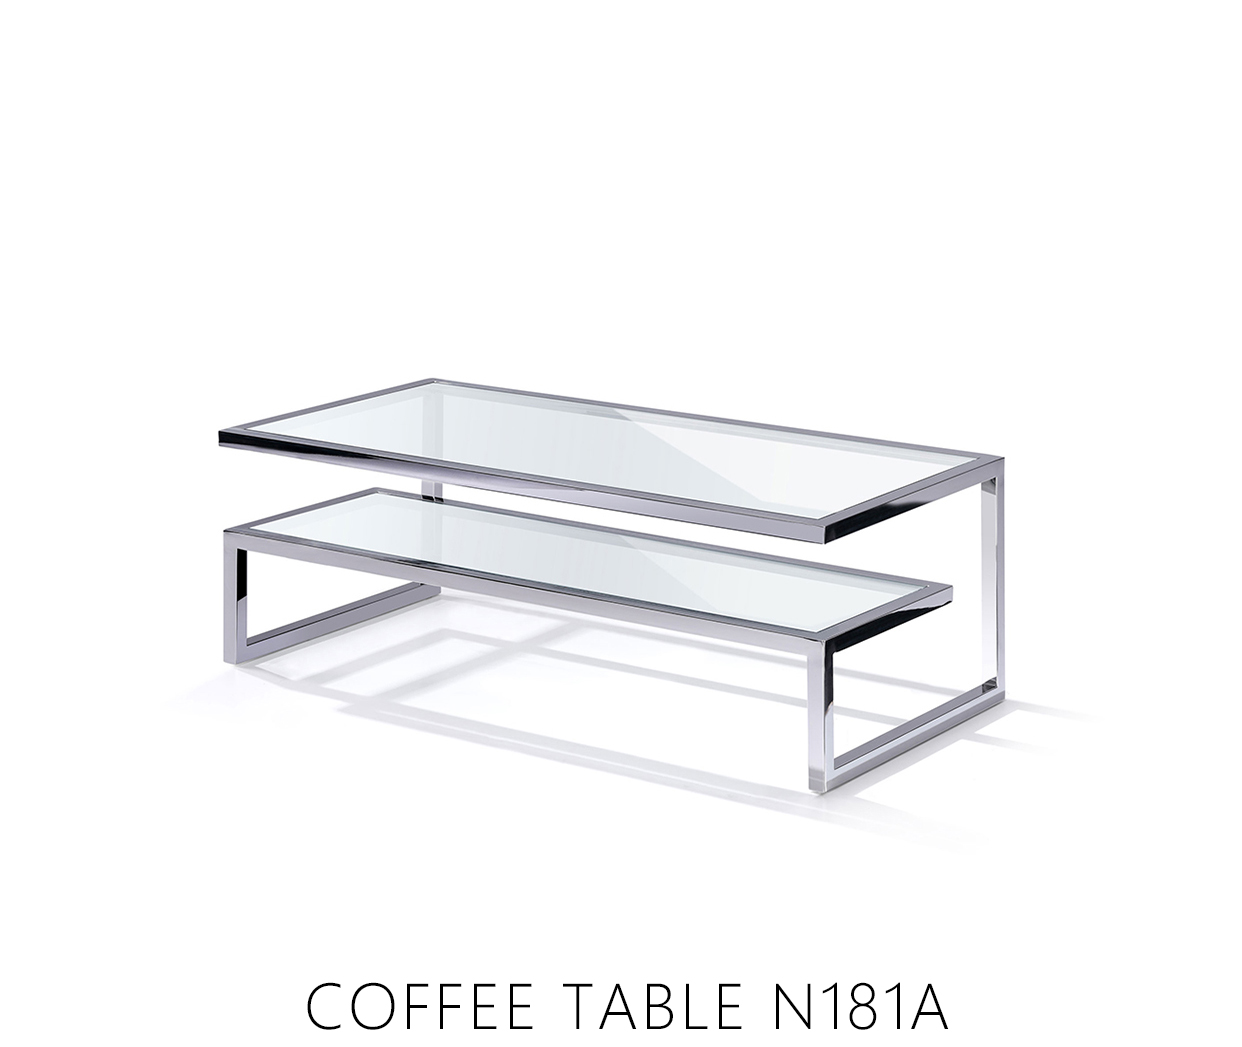 COFFEE TABLE N181A